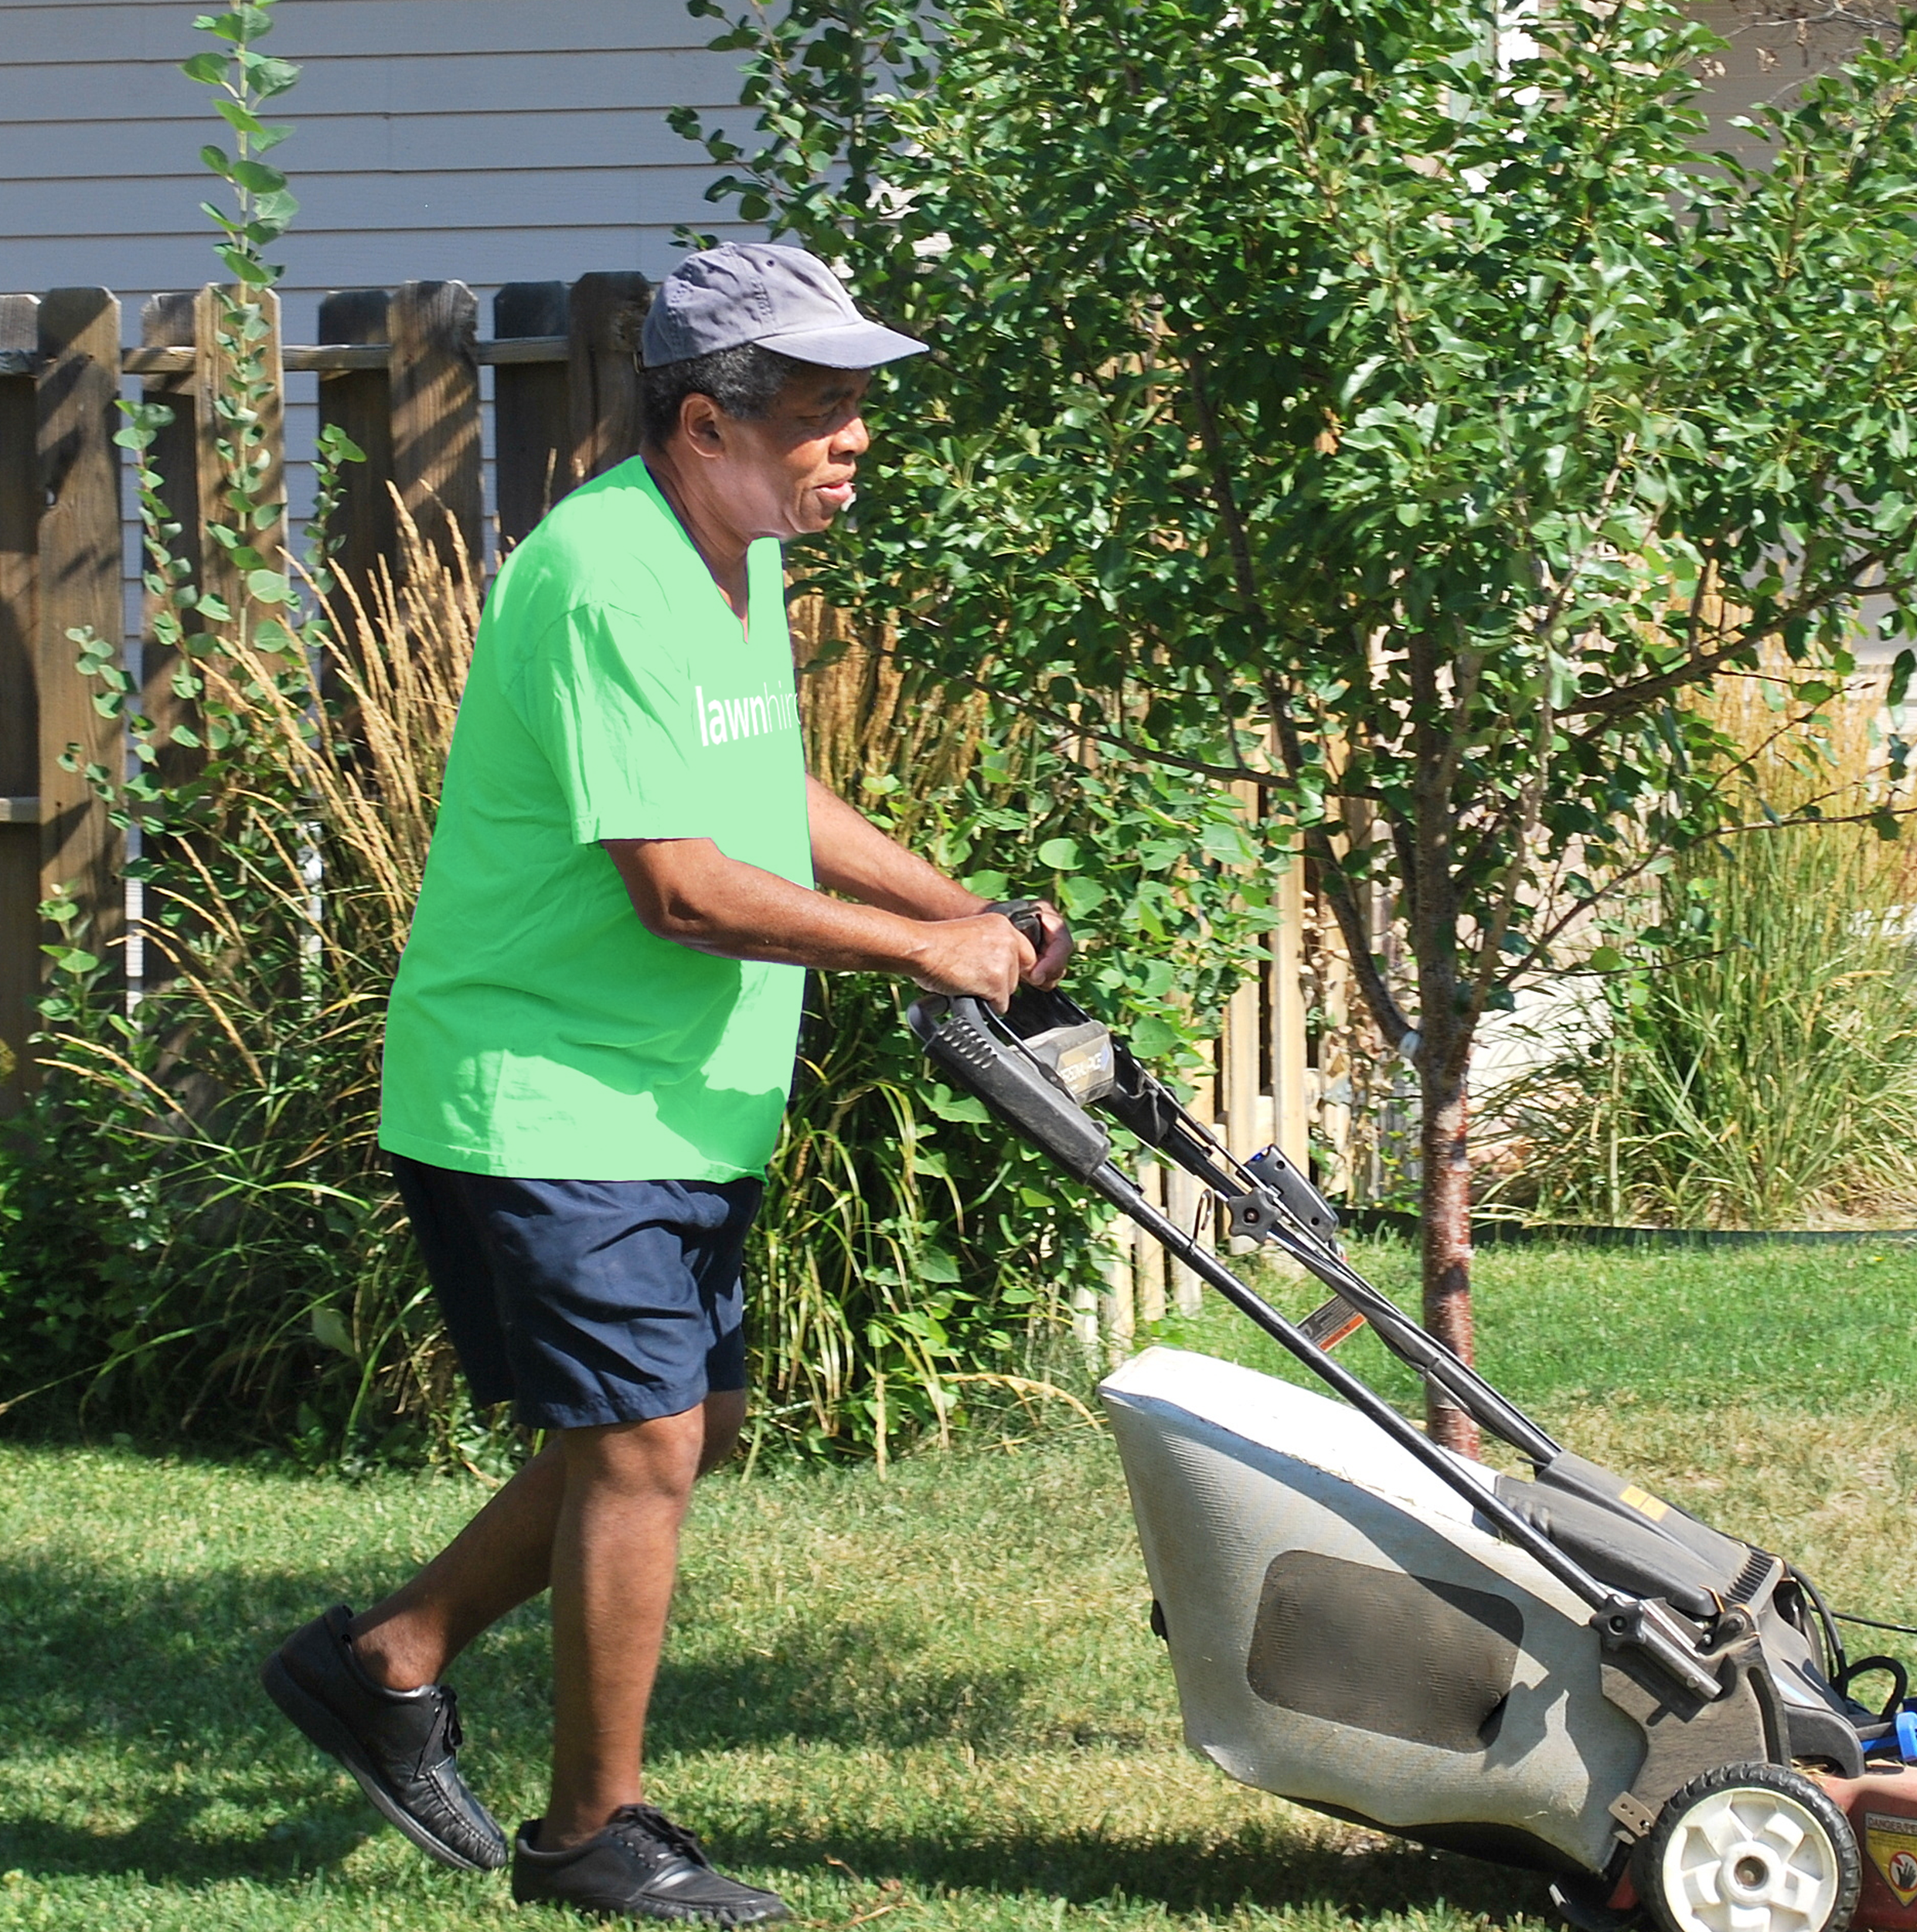 Lawnhiro Provider mowing lawn